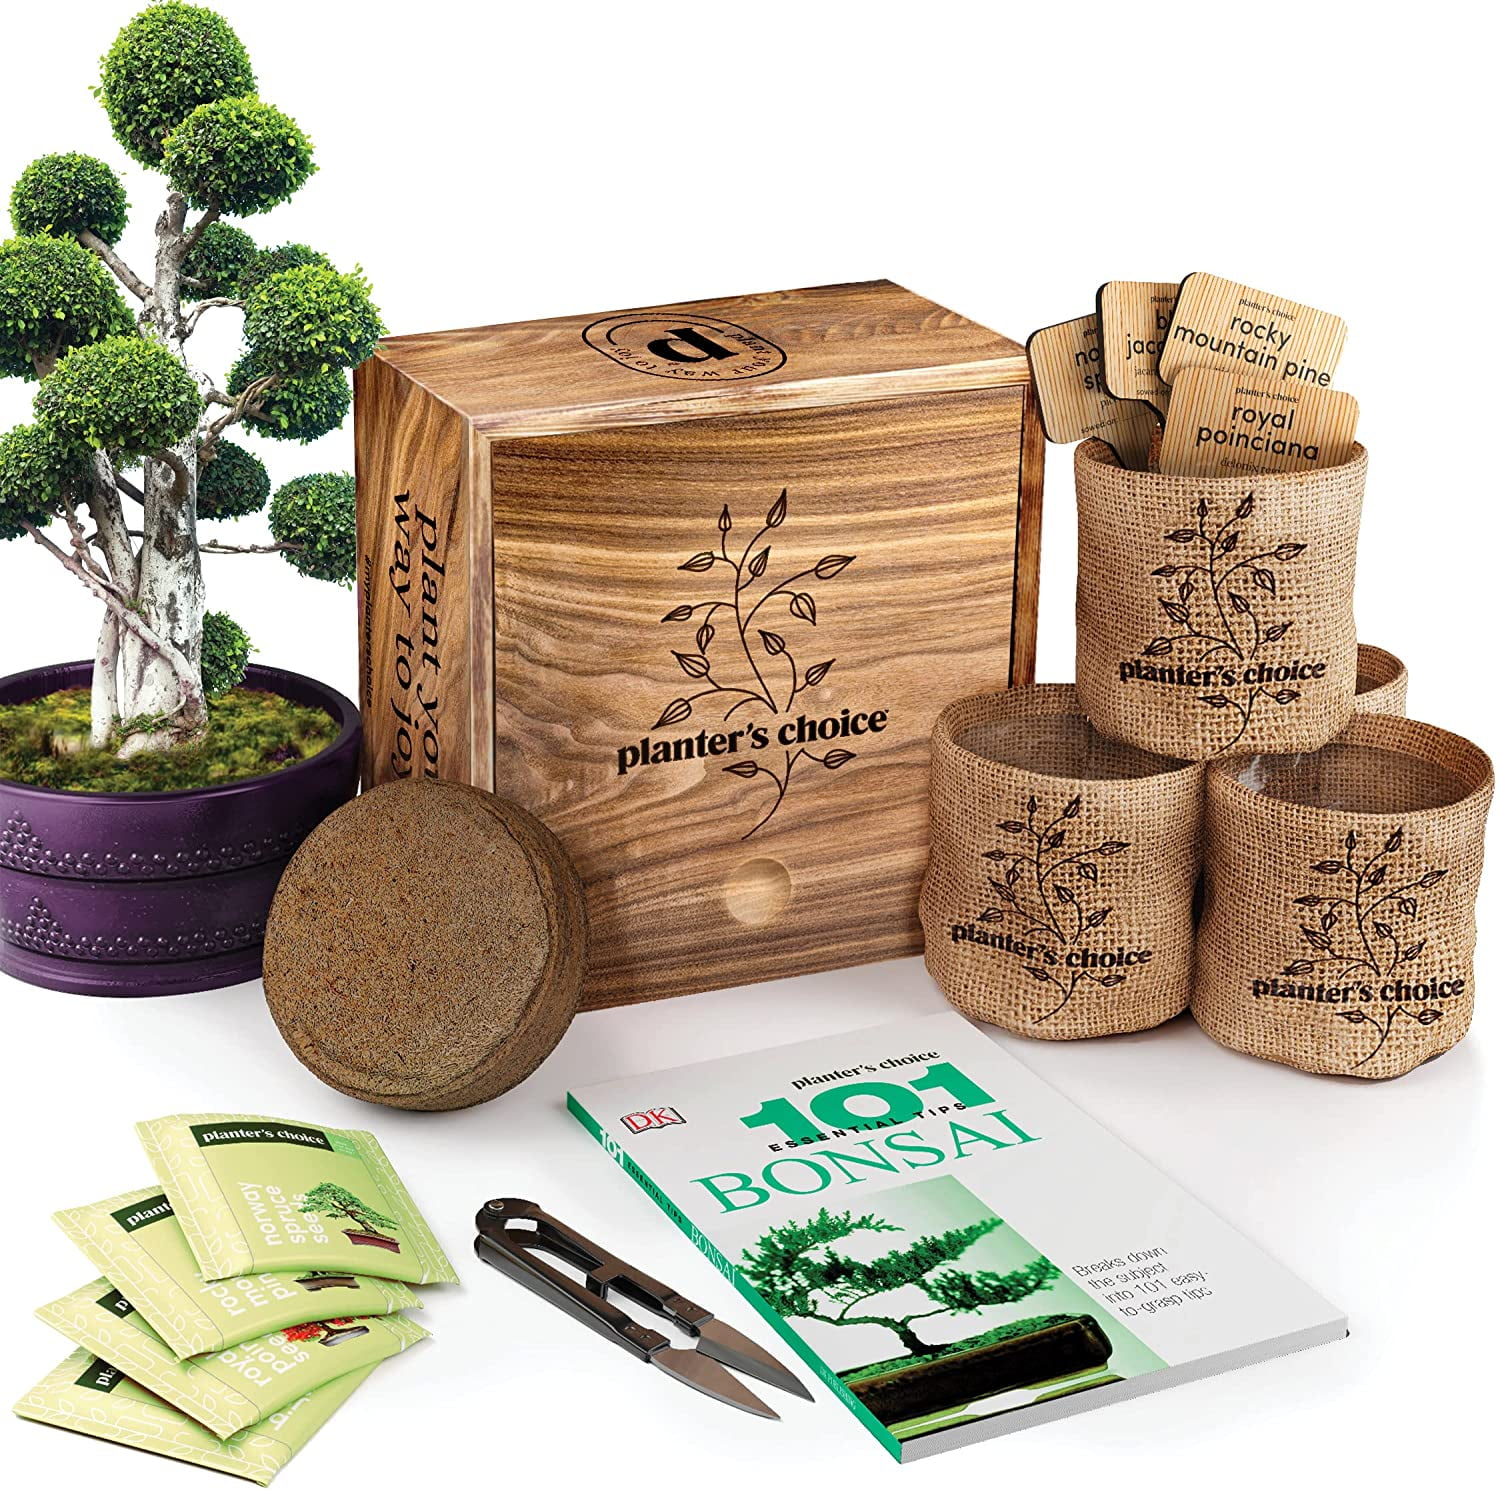 Kit de herramientas para bonsai - Macetas de Bonsai